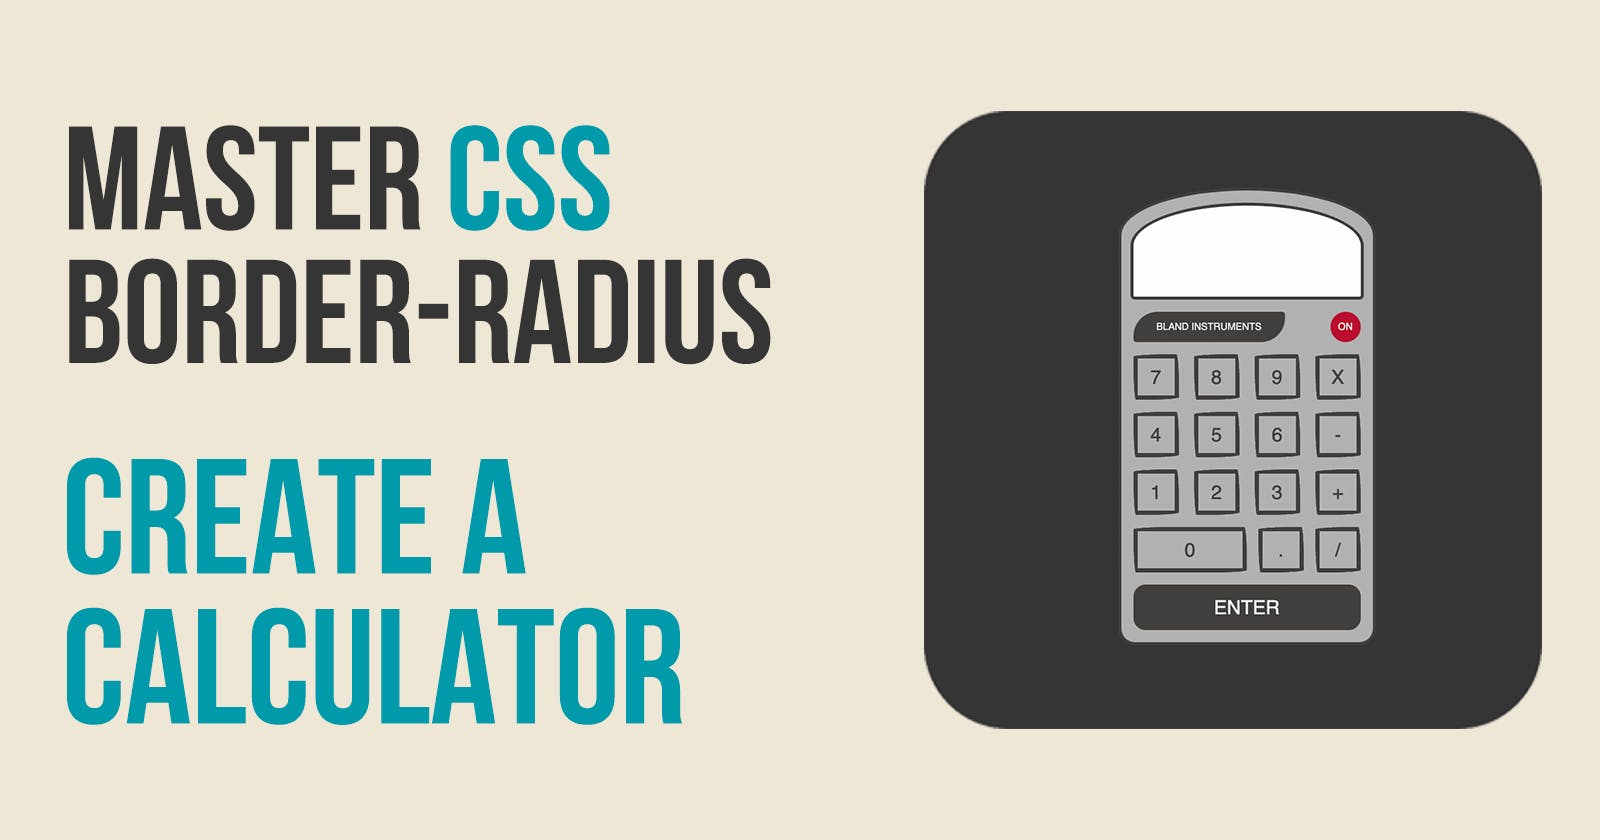 Master CSS border-radius Property by Creating a Calculator